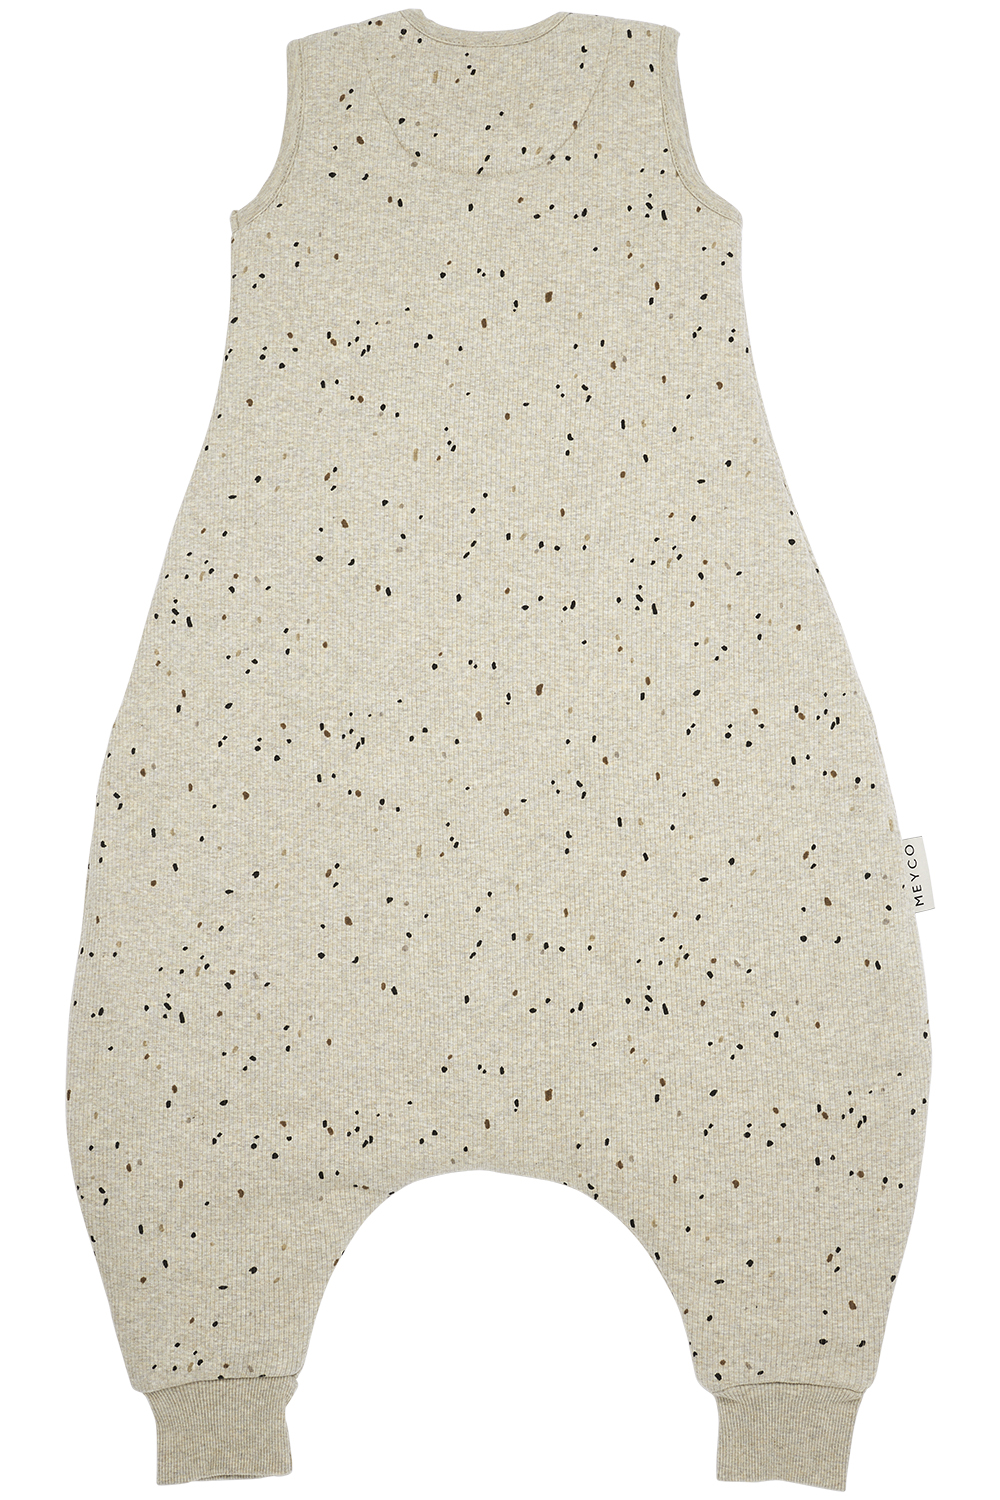 Baby winter Schlafoverall Jumper Rib Mini Spot - sand melange - 80cm